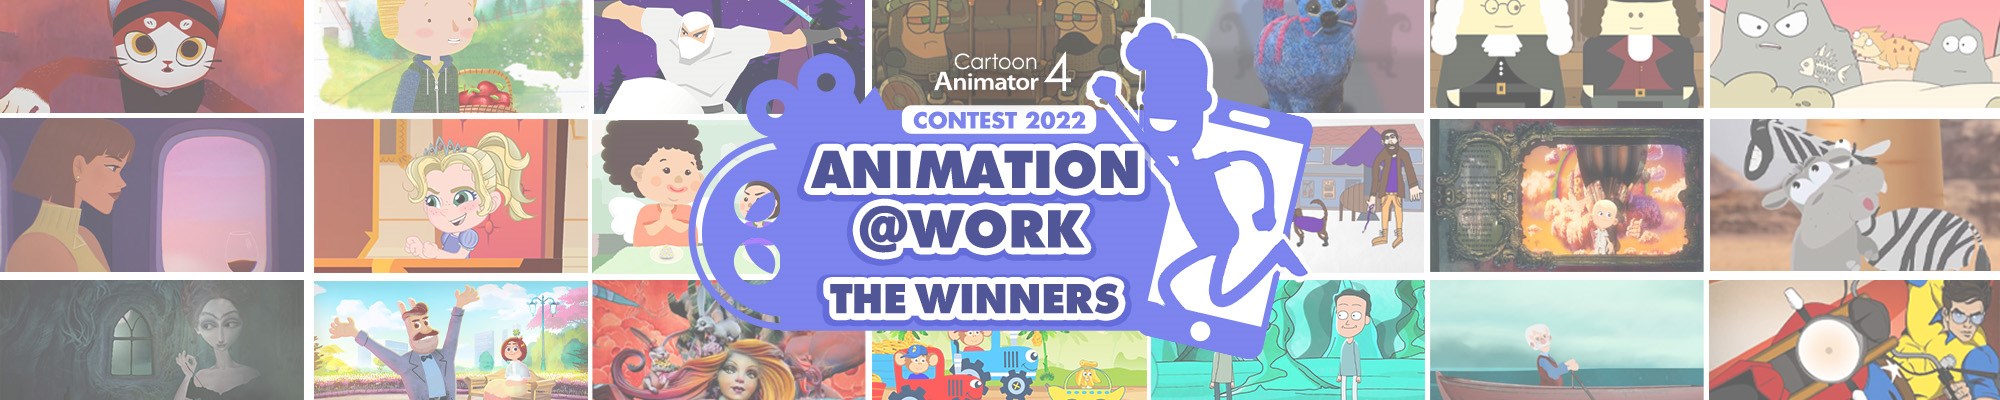 CTA Animation@Work Contest 2022 - Winners